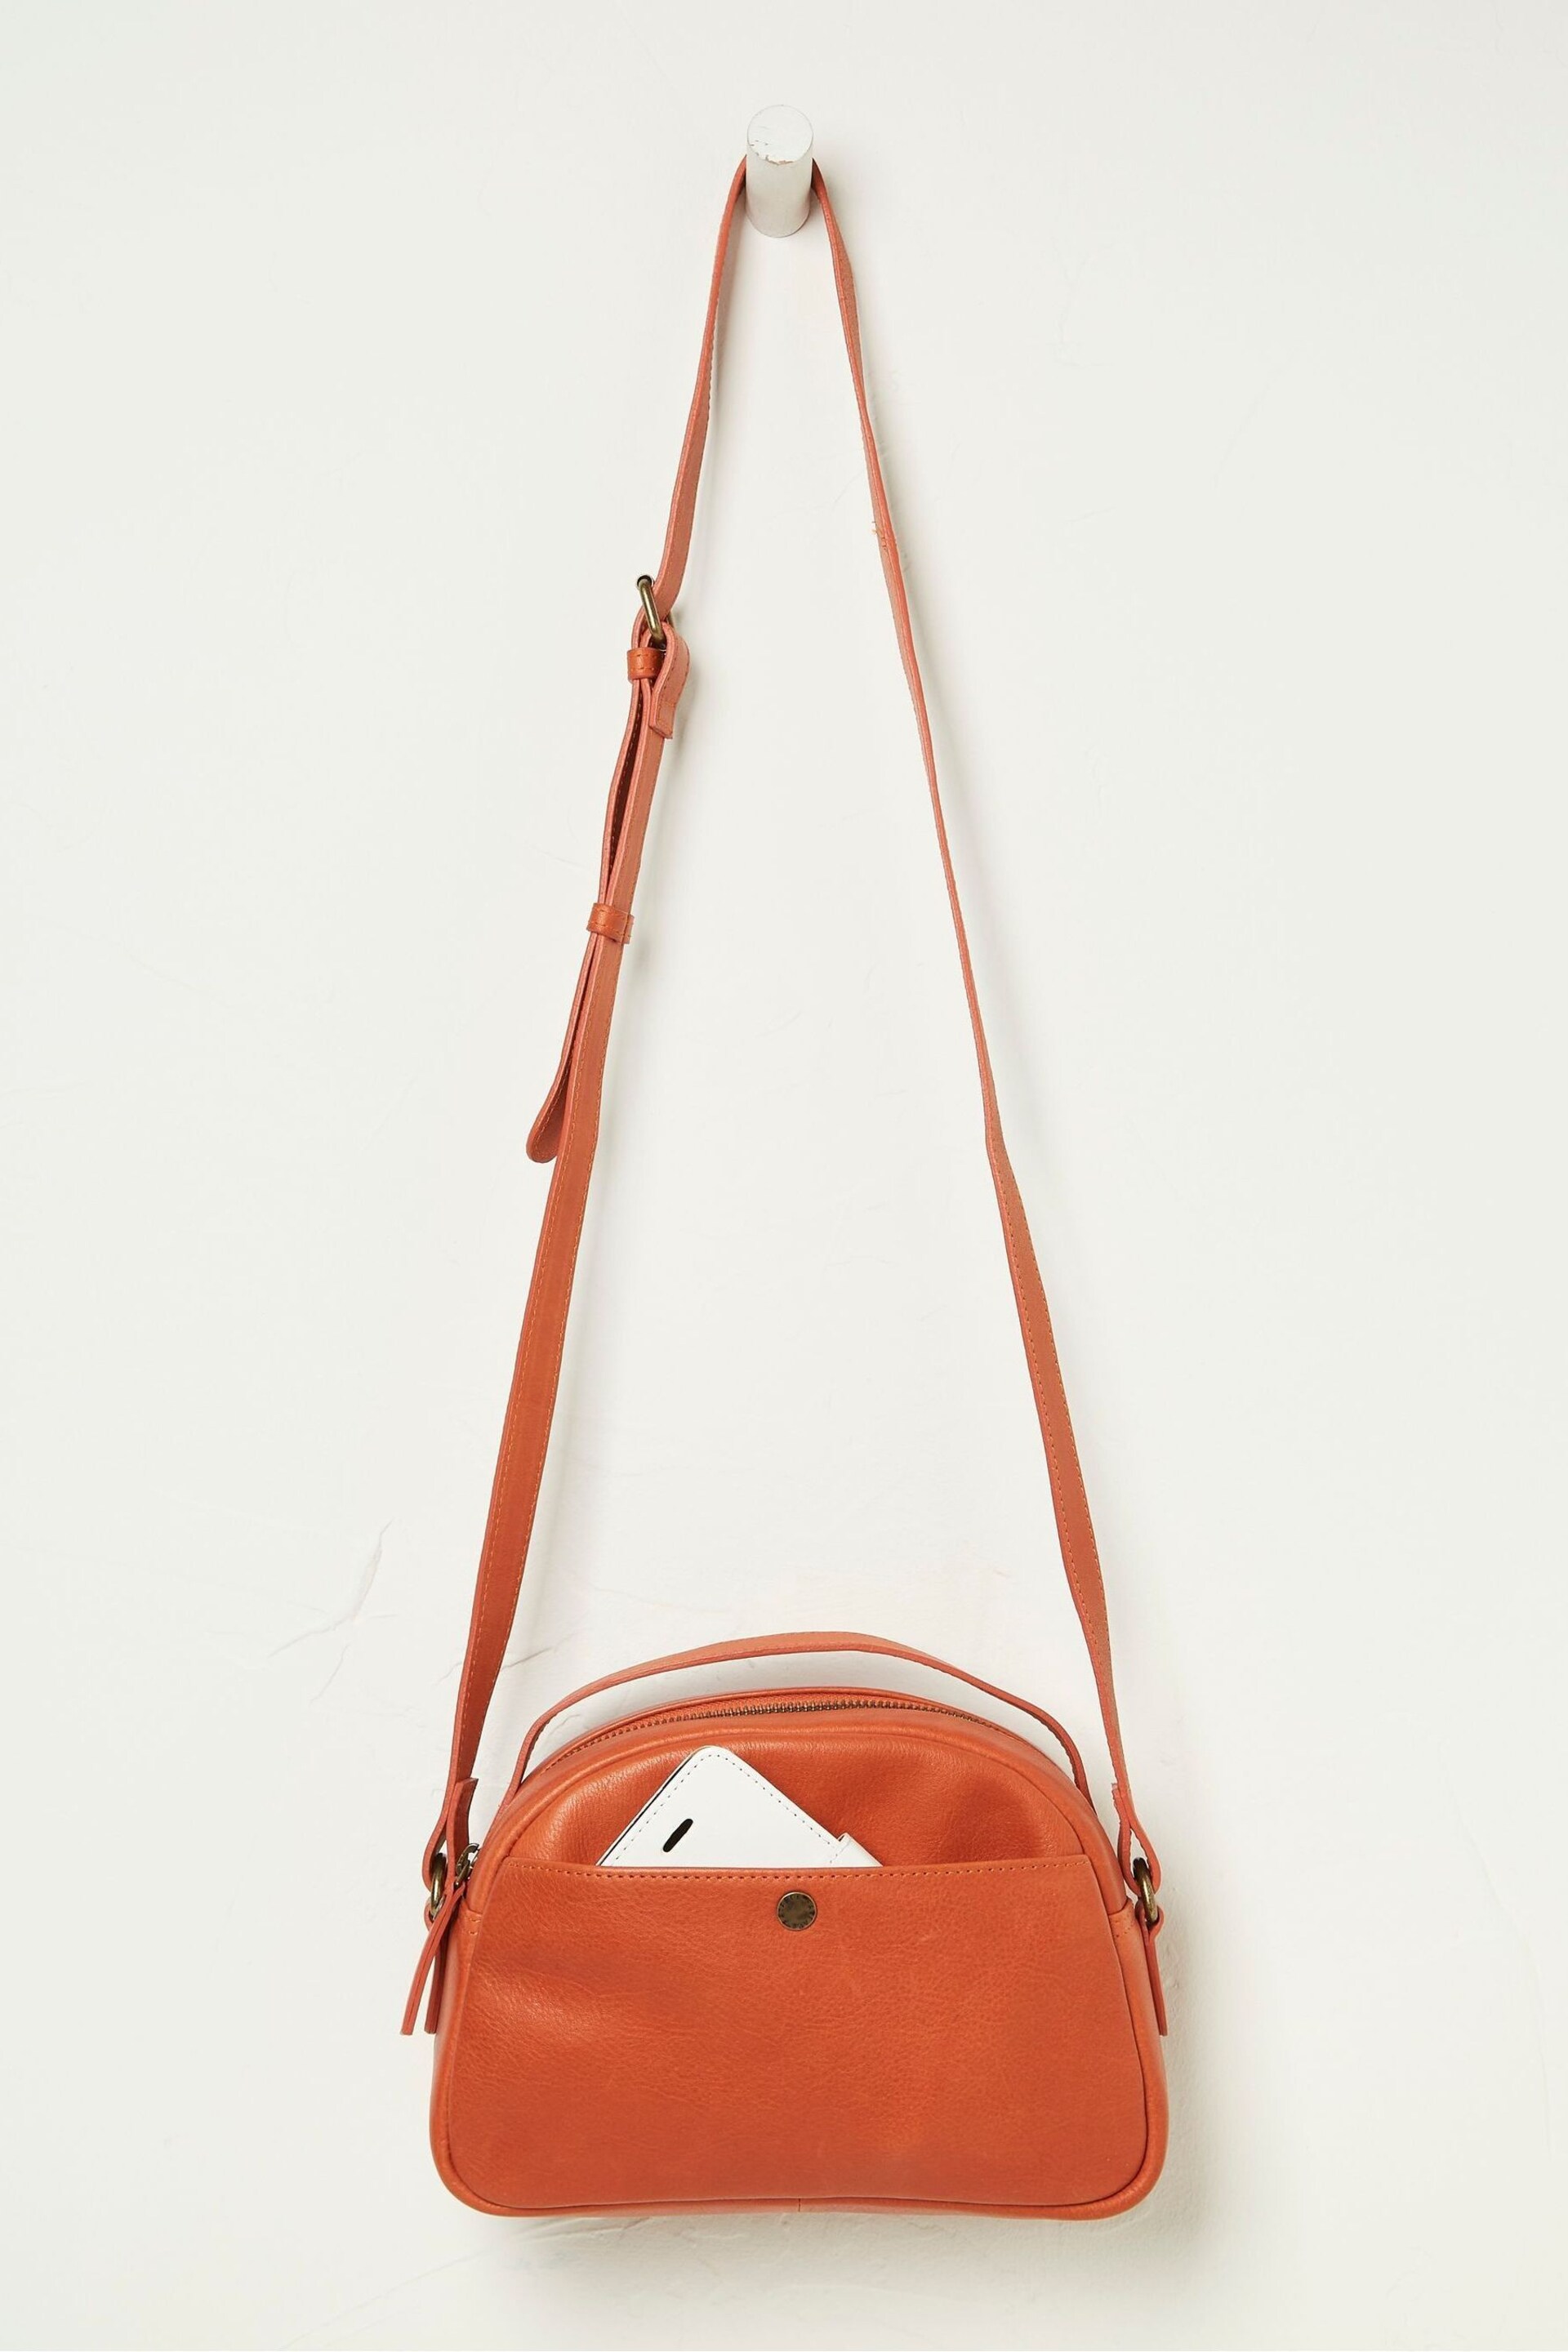 FatFace Orange The Callie Cross-Body Bag - Image 2 of 3